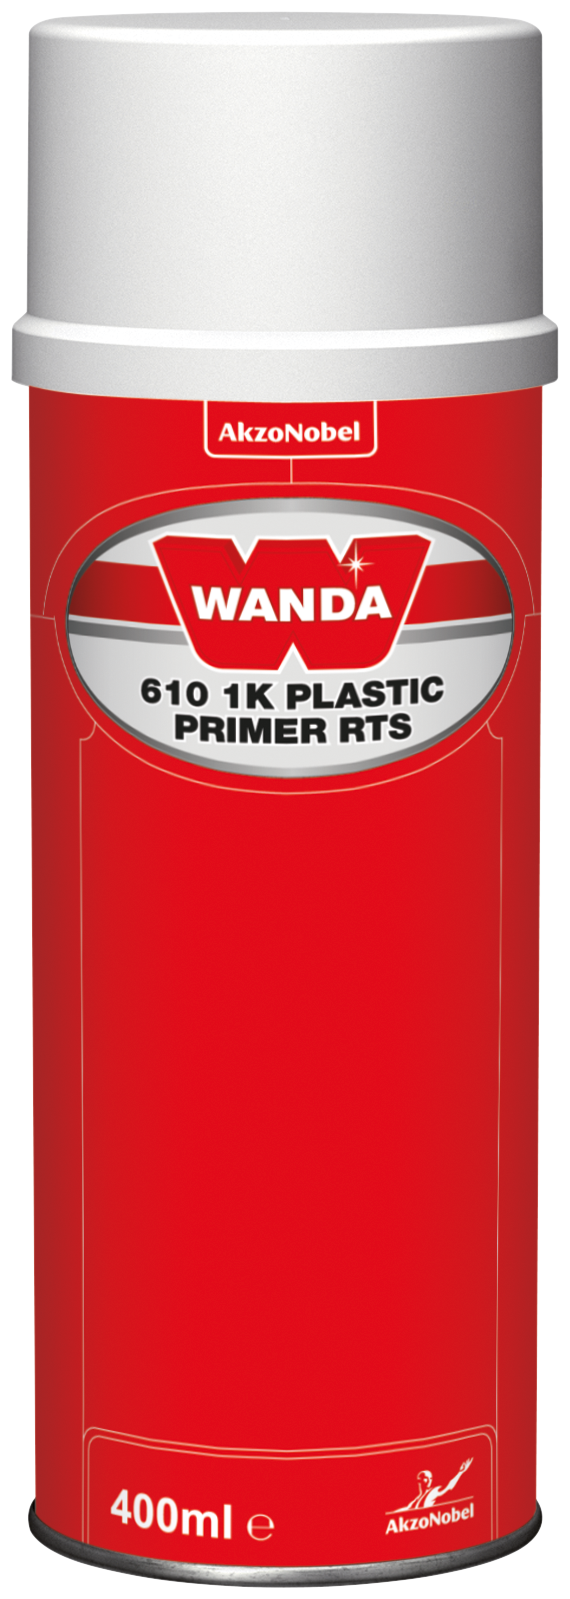 plastic WANDA SPRAY 610 PLASTIC PRIMER 1K 400 ML WAN 560967